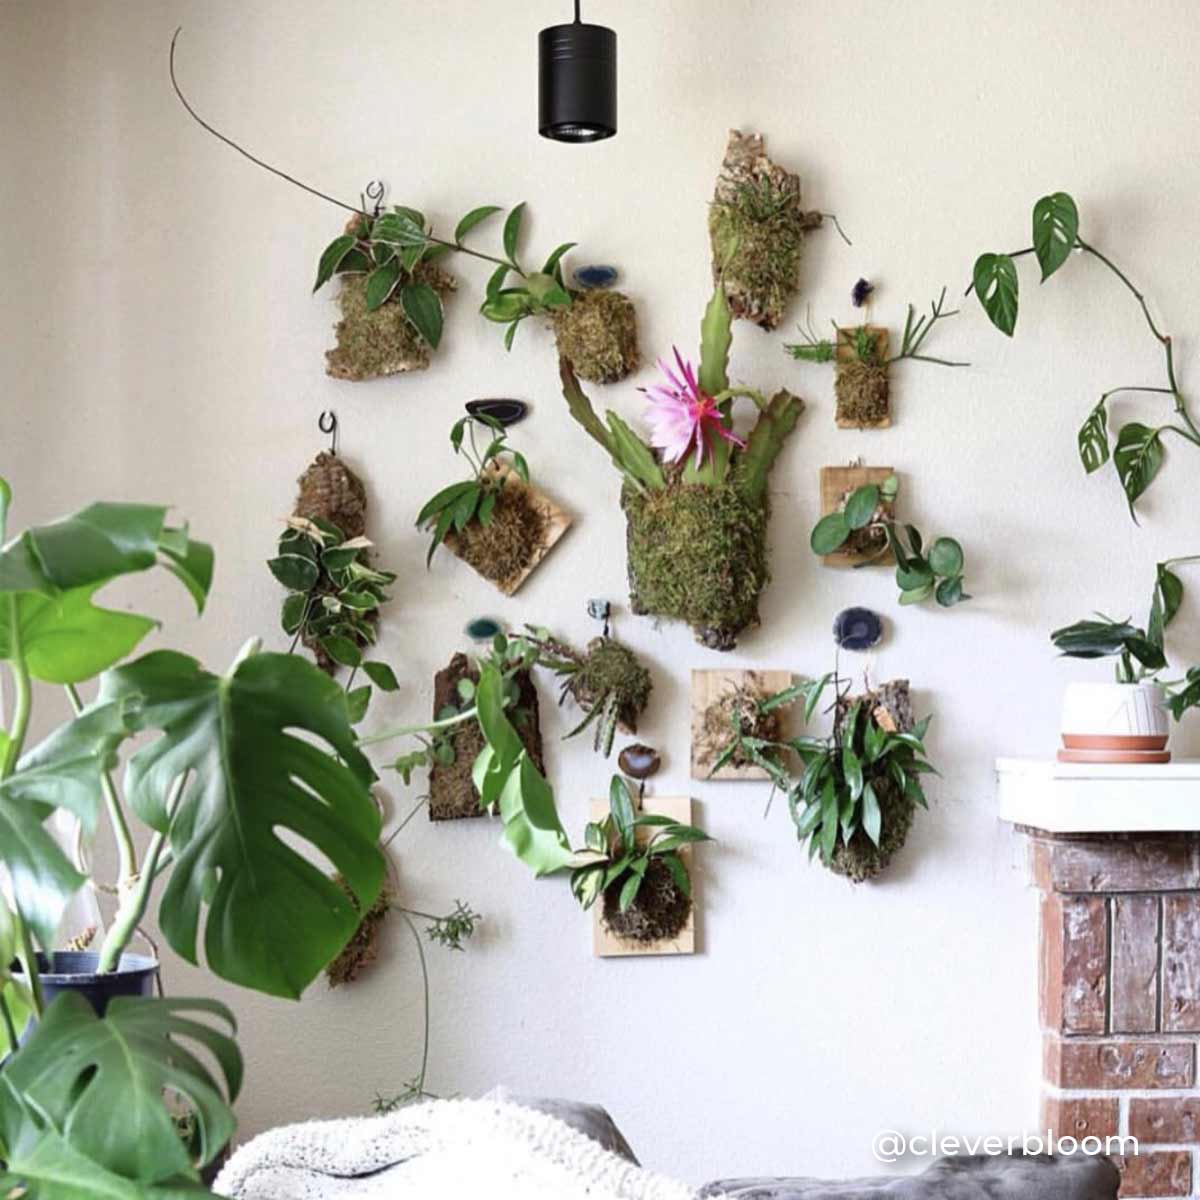 Hanging Indoor Plant Grow Light, Pendant Grow Light, Aspect™ Growlight